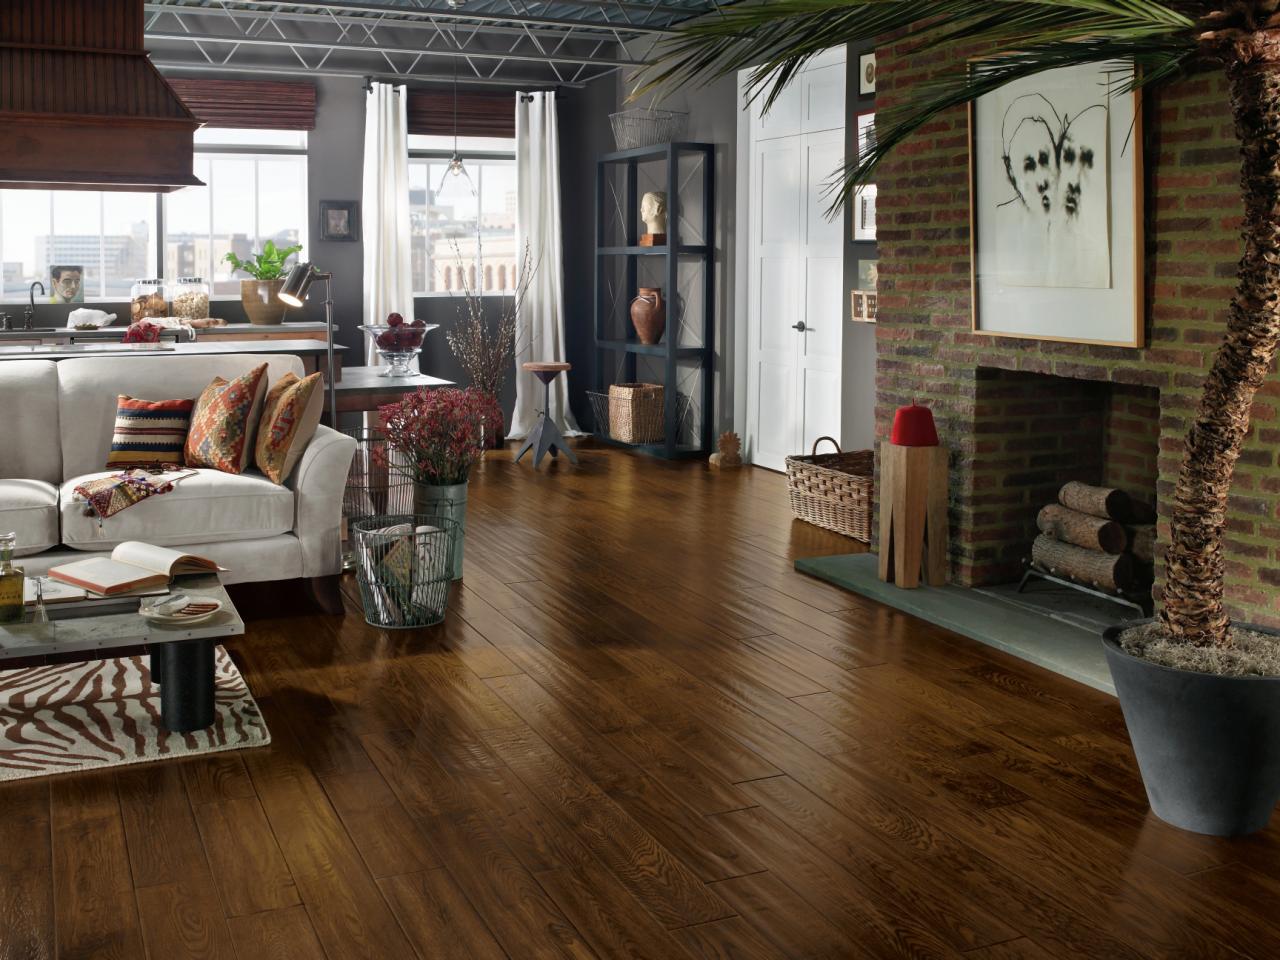 Top Living Room Flooring Options | Hgtv